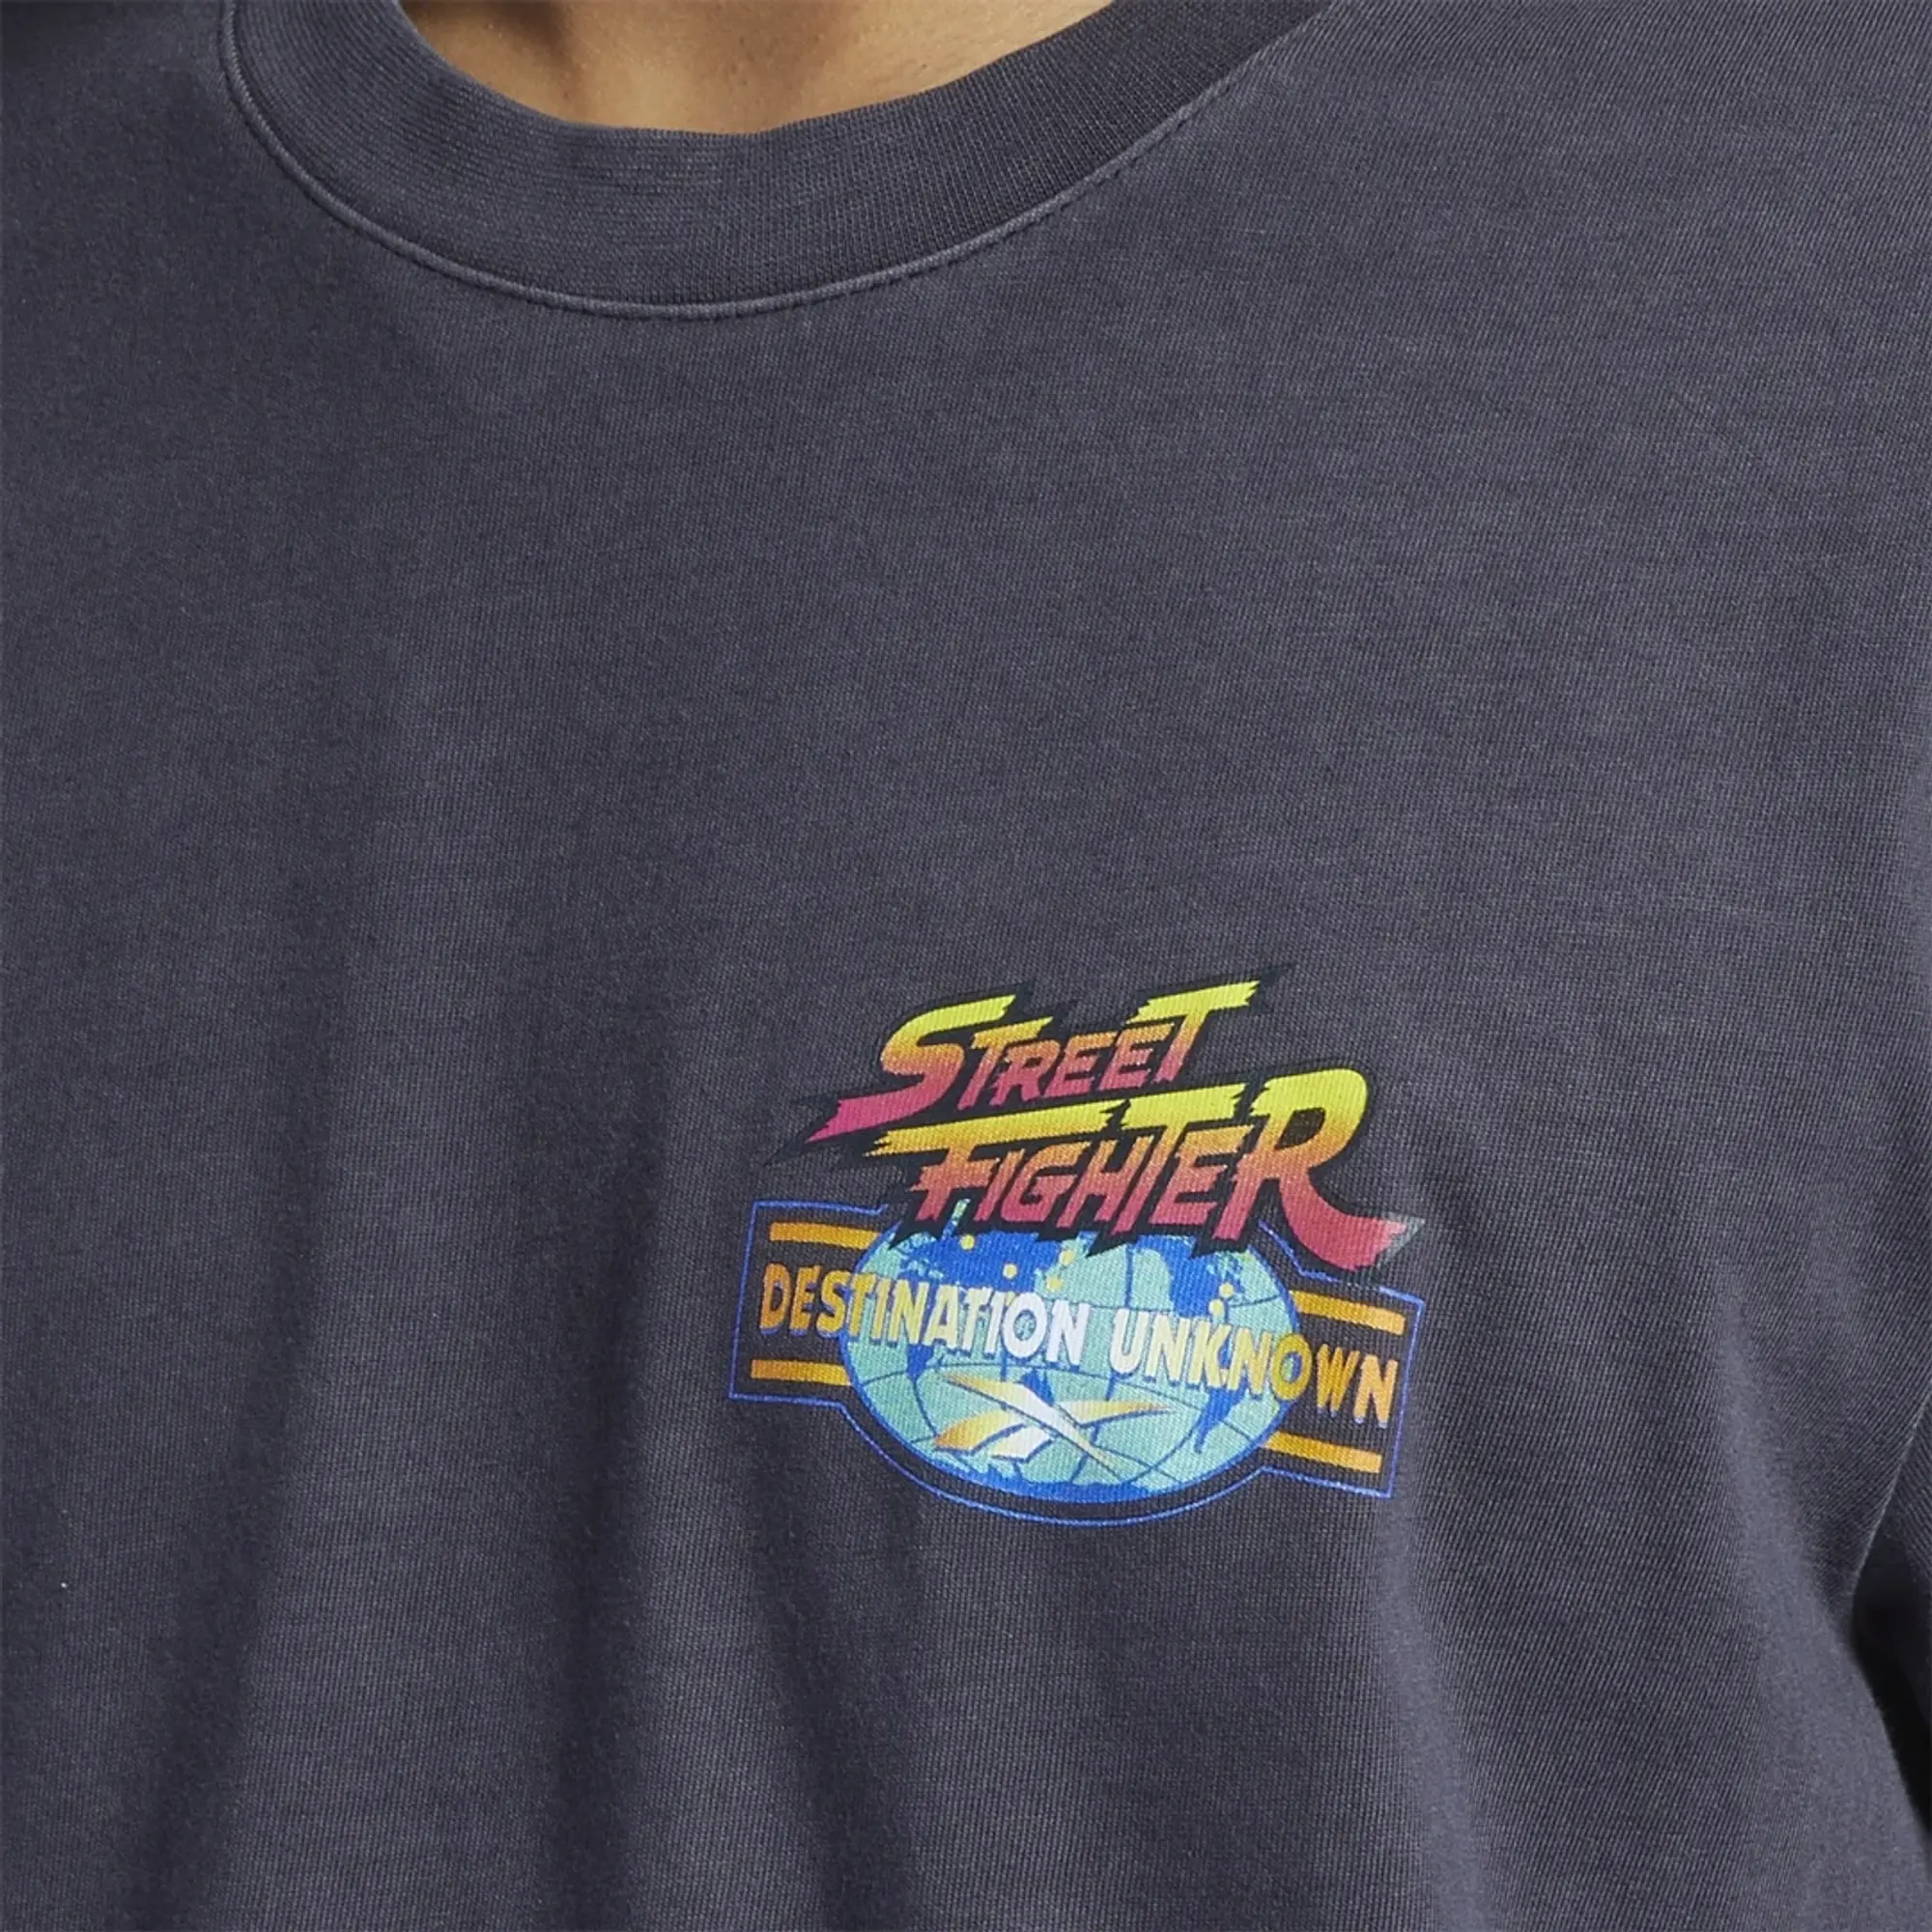 Reebok Street Fighter Graphic T-Shirt - Black